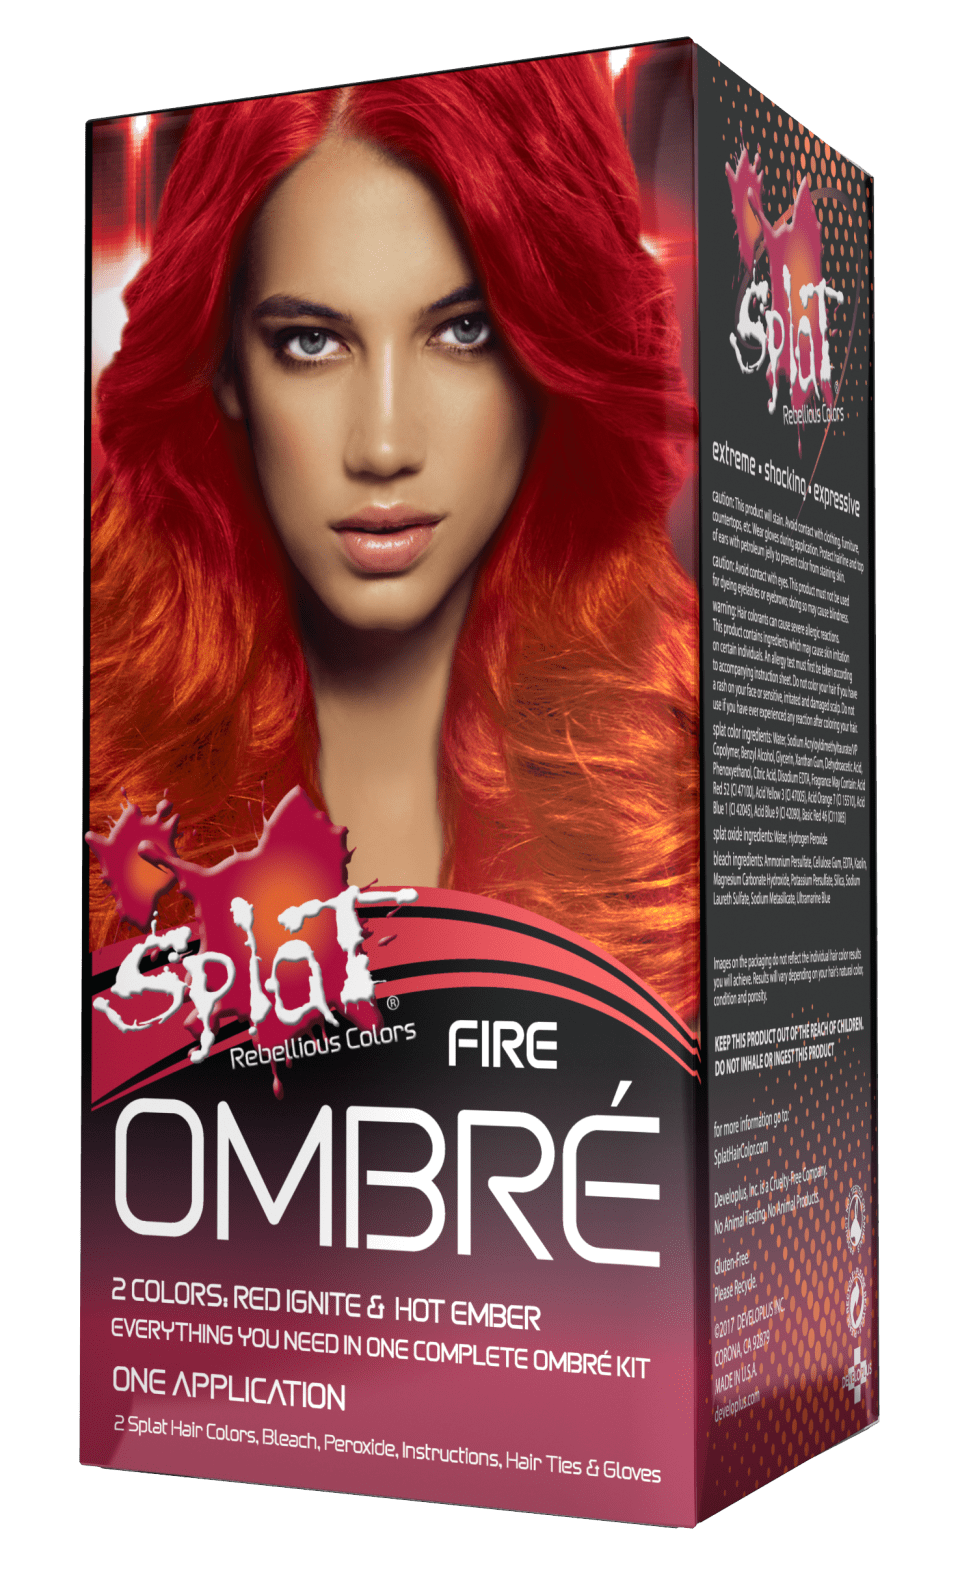 SPLAT Ombre Dream Complete Hair Bleaching Kit – Sulfate-Free Hair Dye